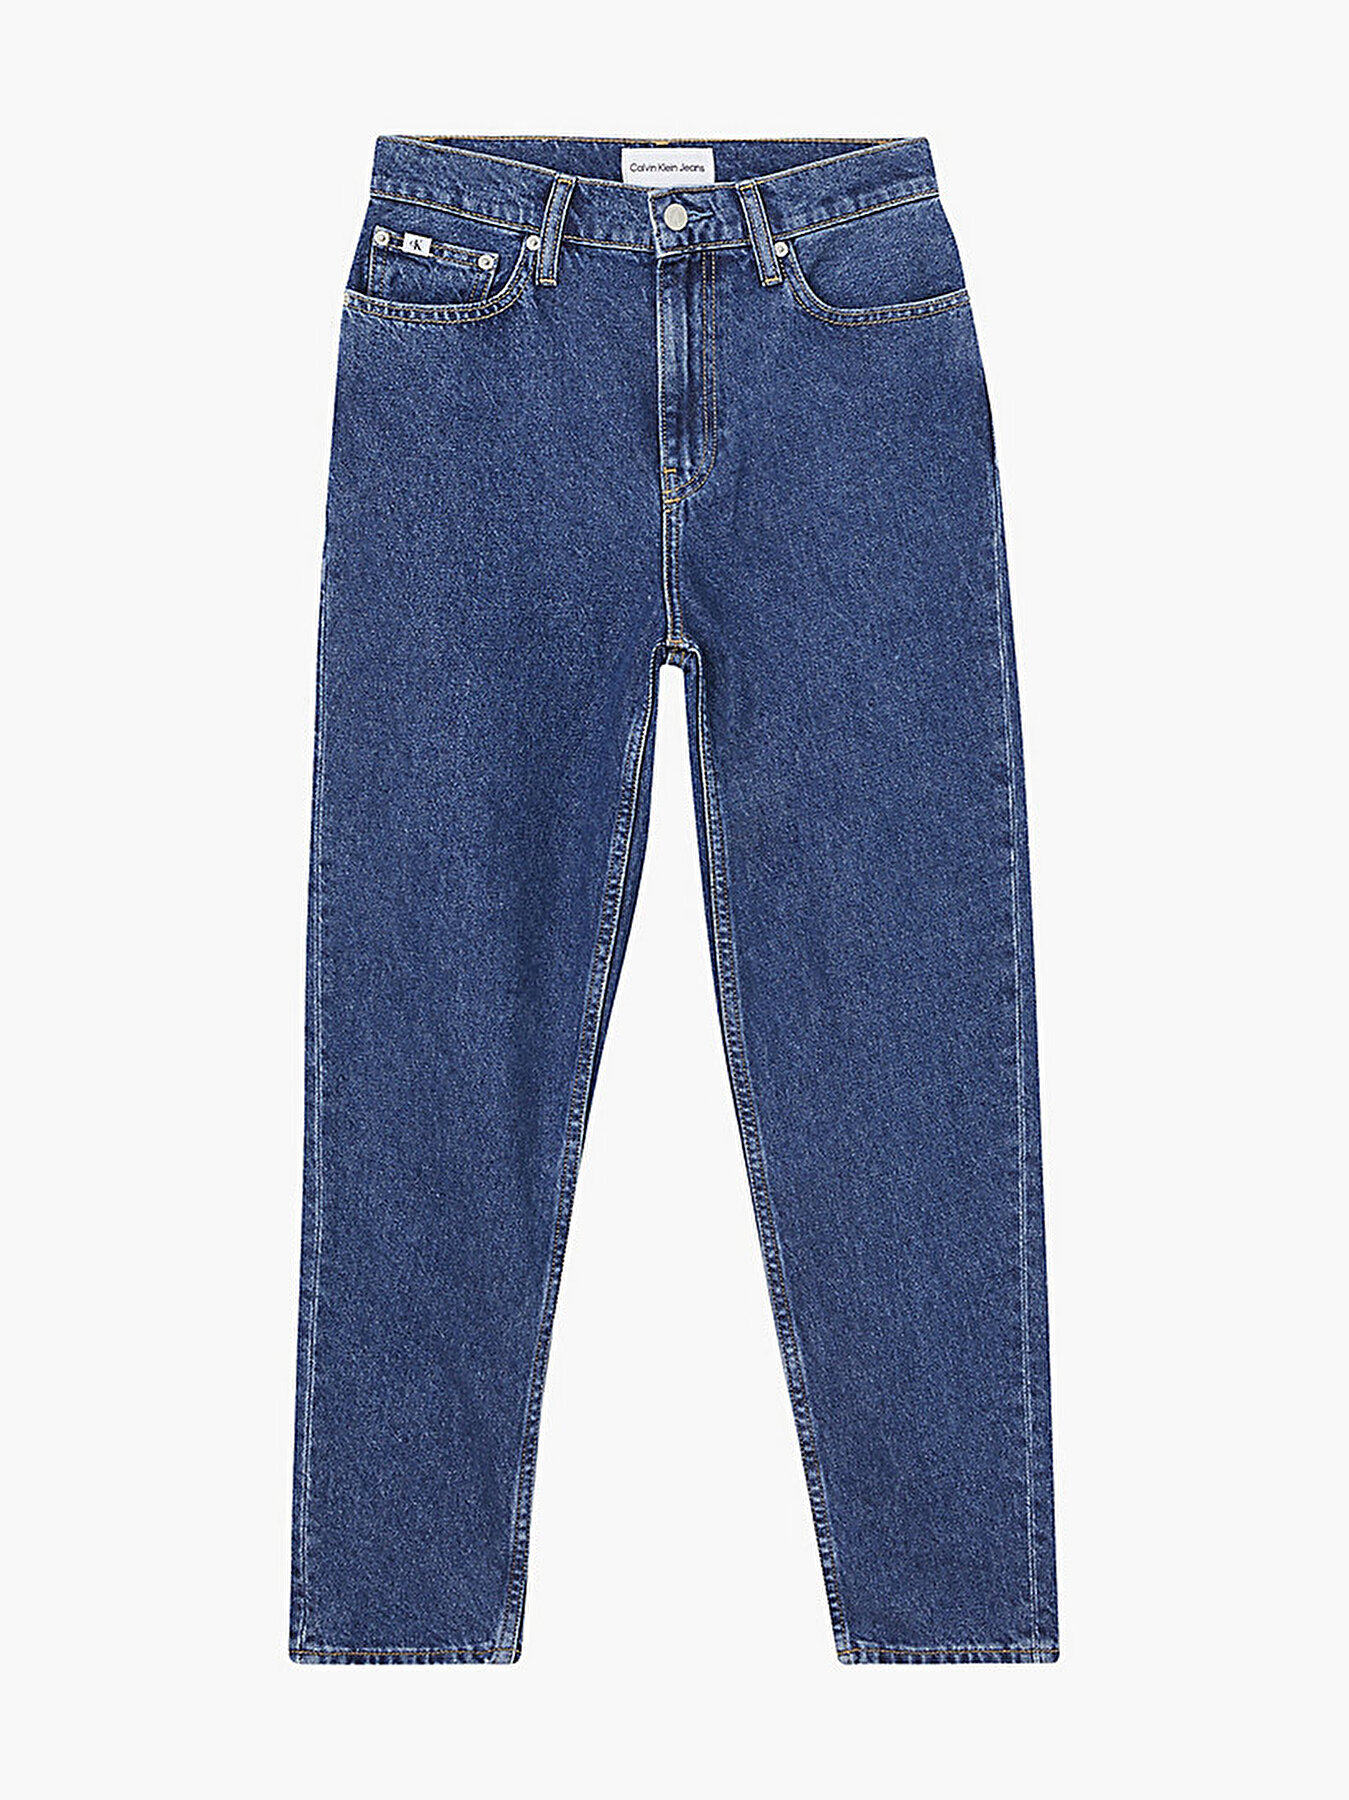 Blue 34                  EU discount 73% Zara boyfriend jeans WOMEN FASHION Jeans Boyfriend jeans Embroidery 